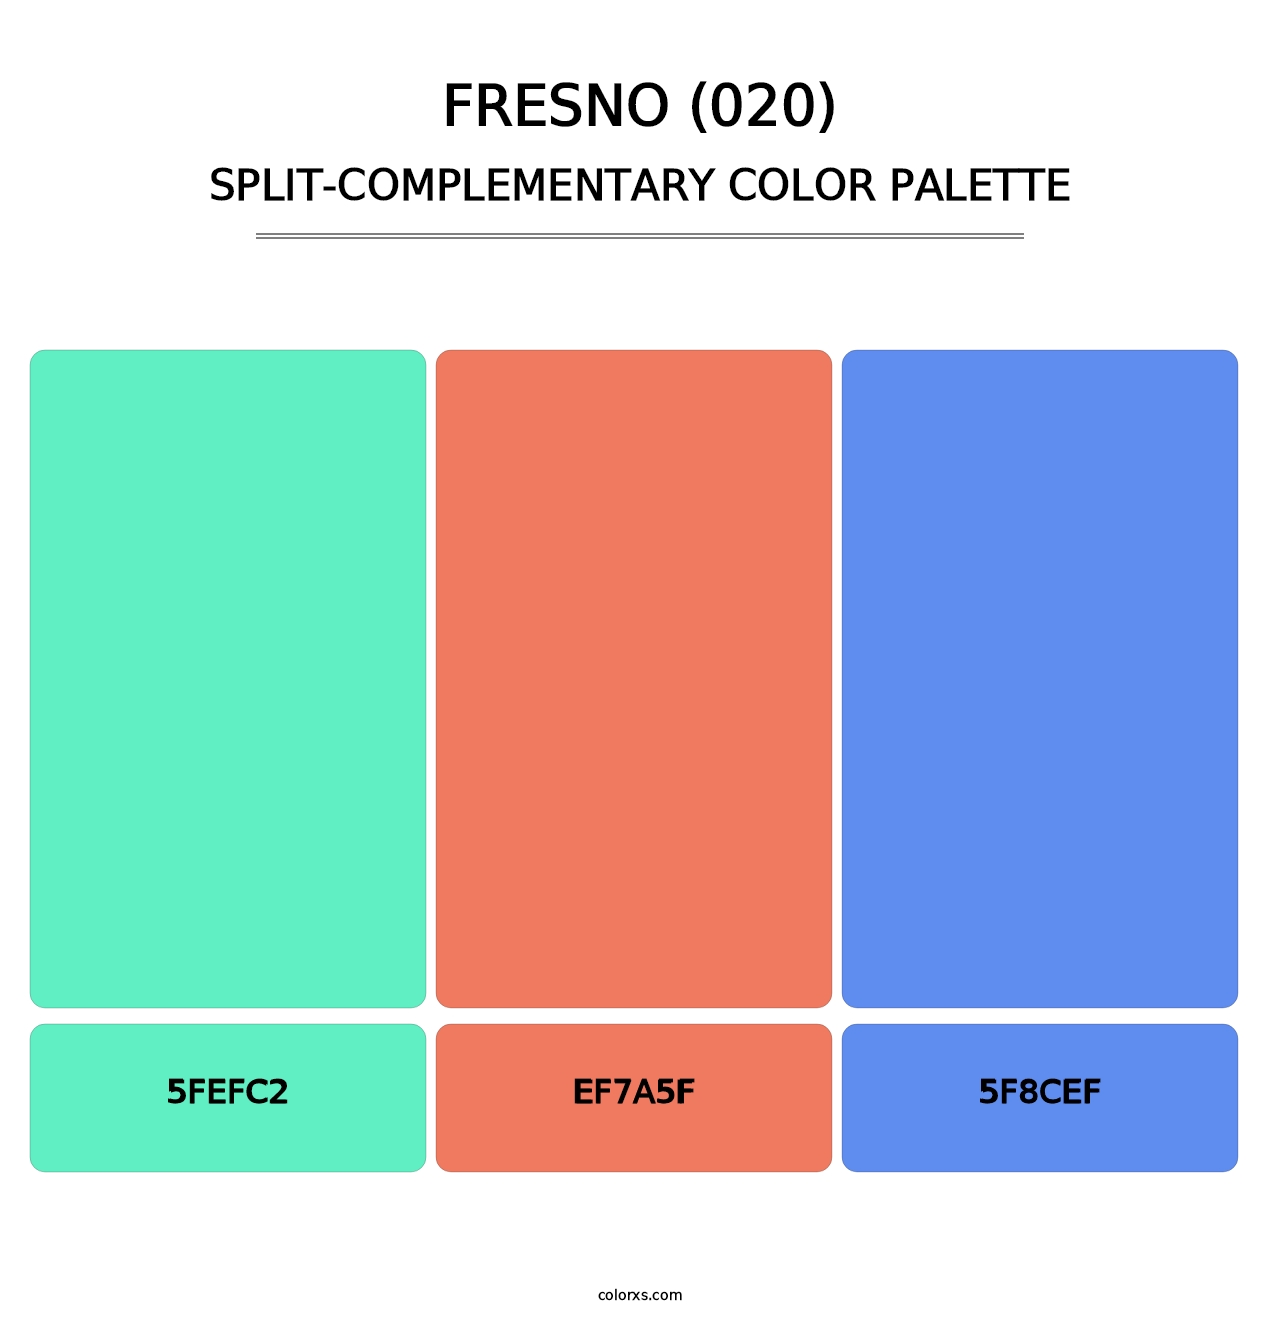 Fresno (020) - Split-Complementary Color Palette